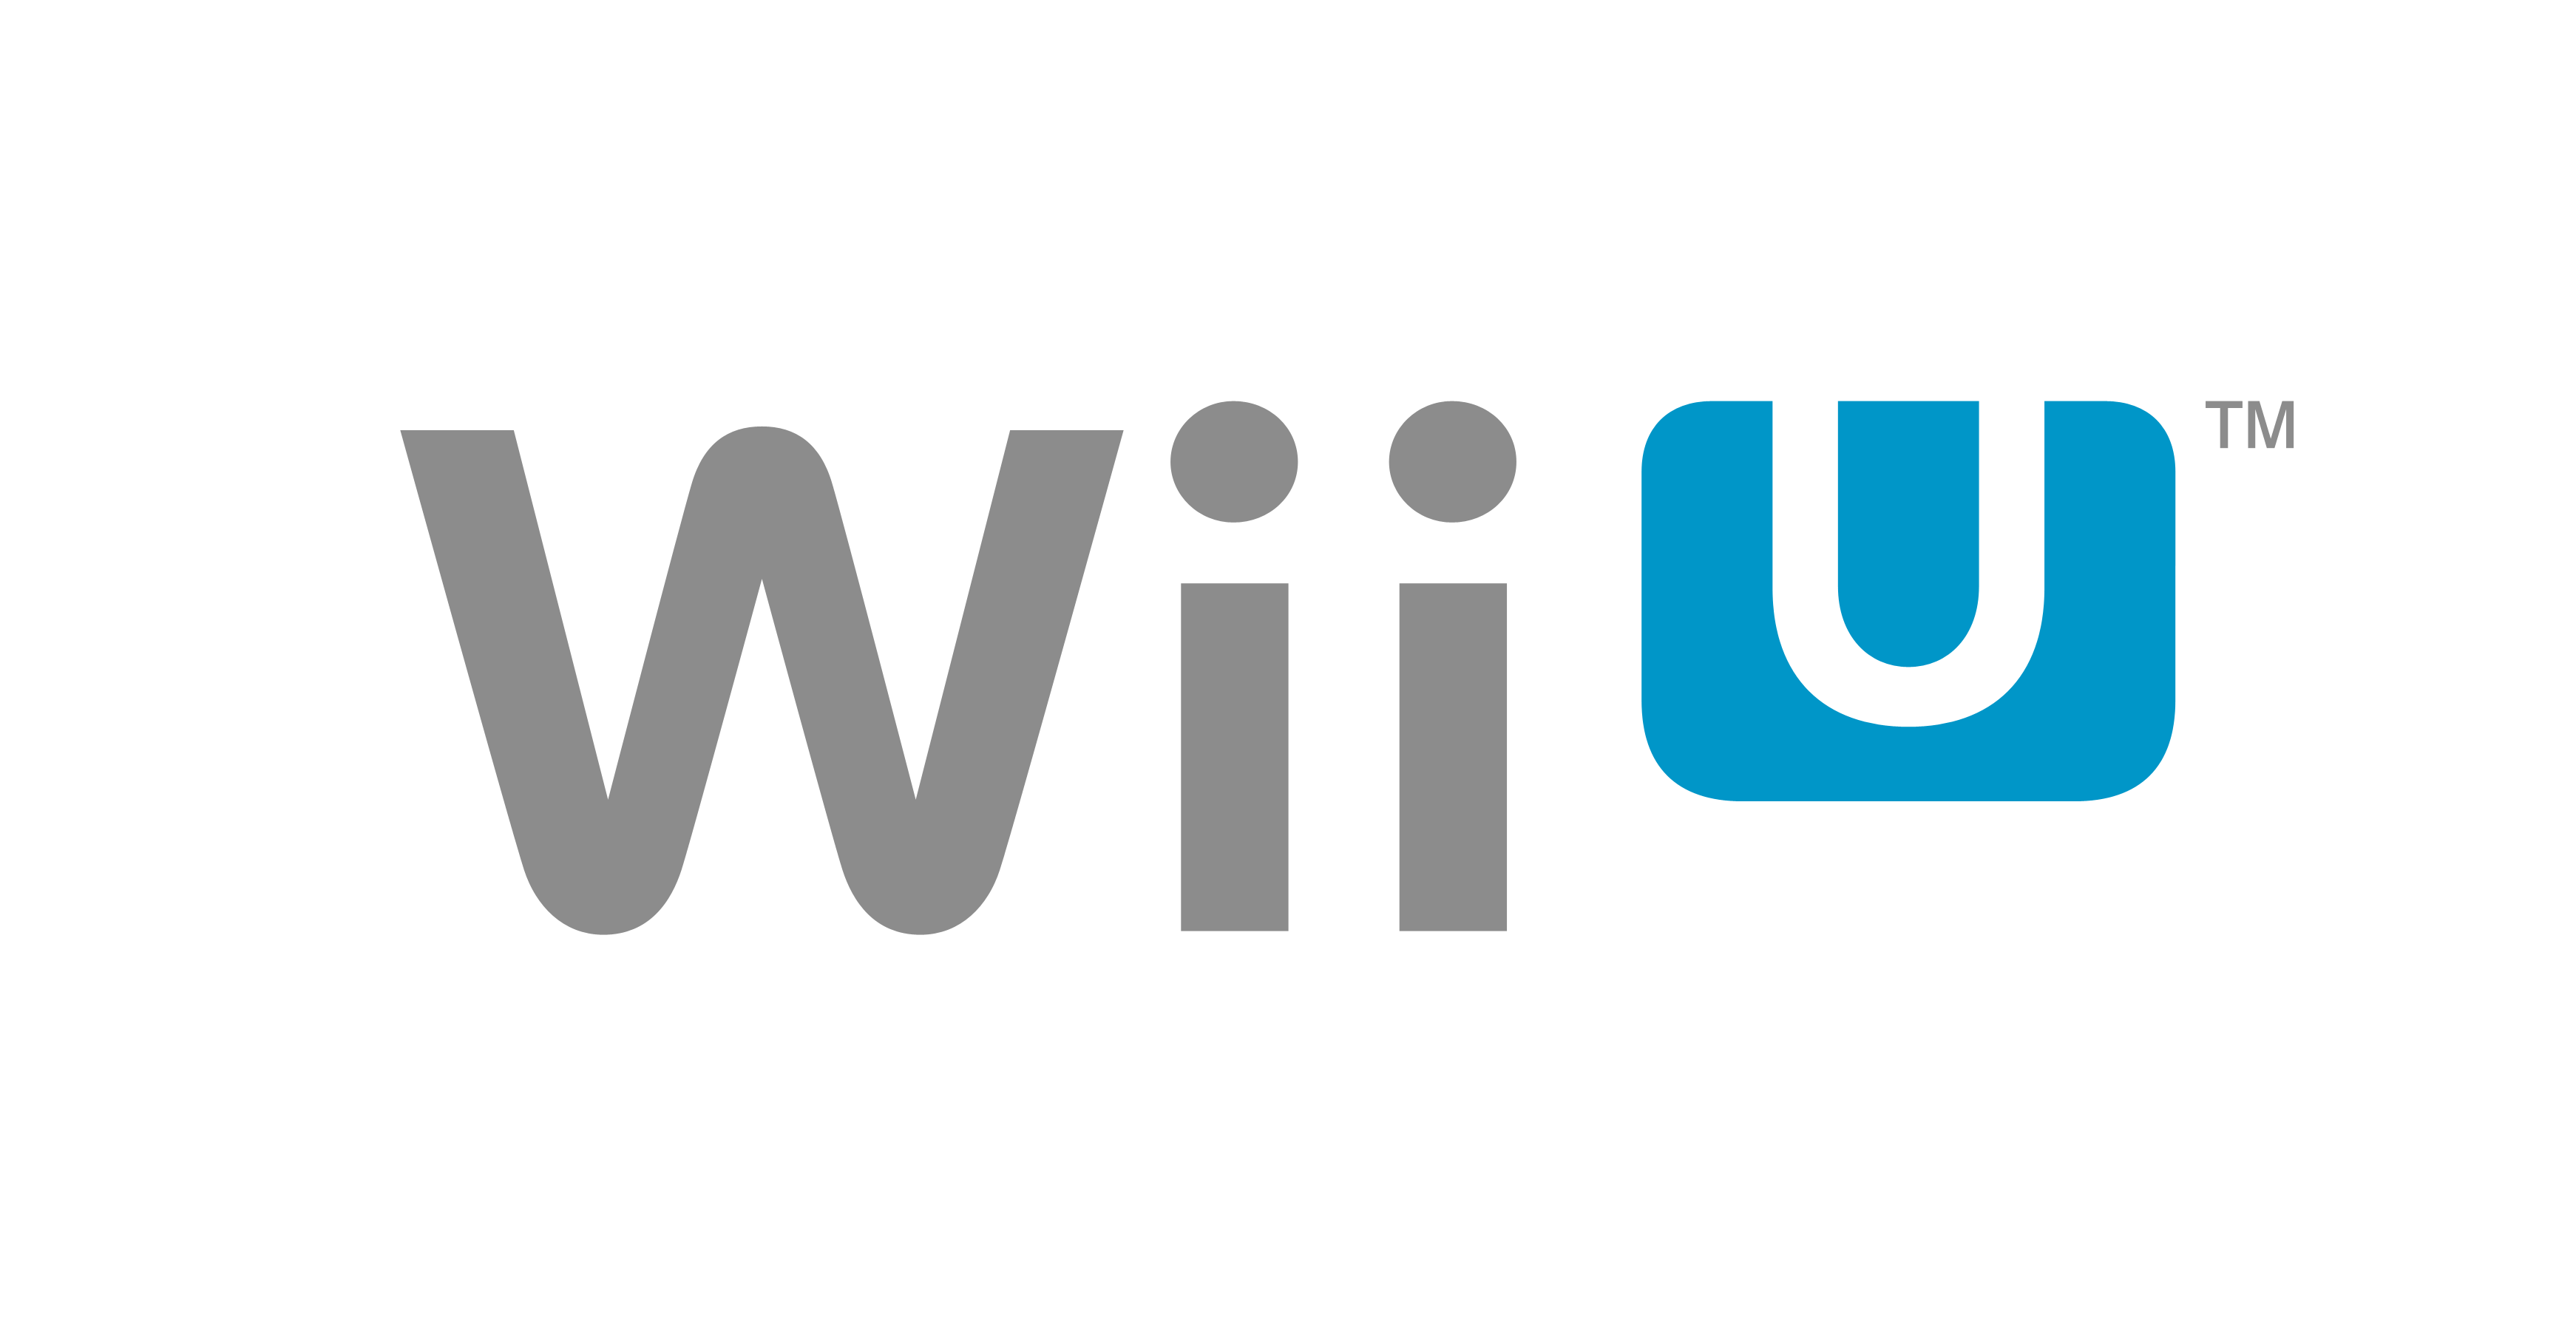 Super Smash Bros. for Wii U - Cemu Wiki